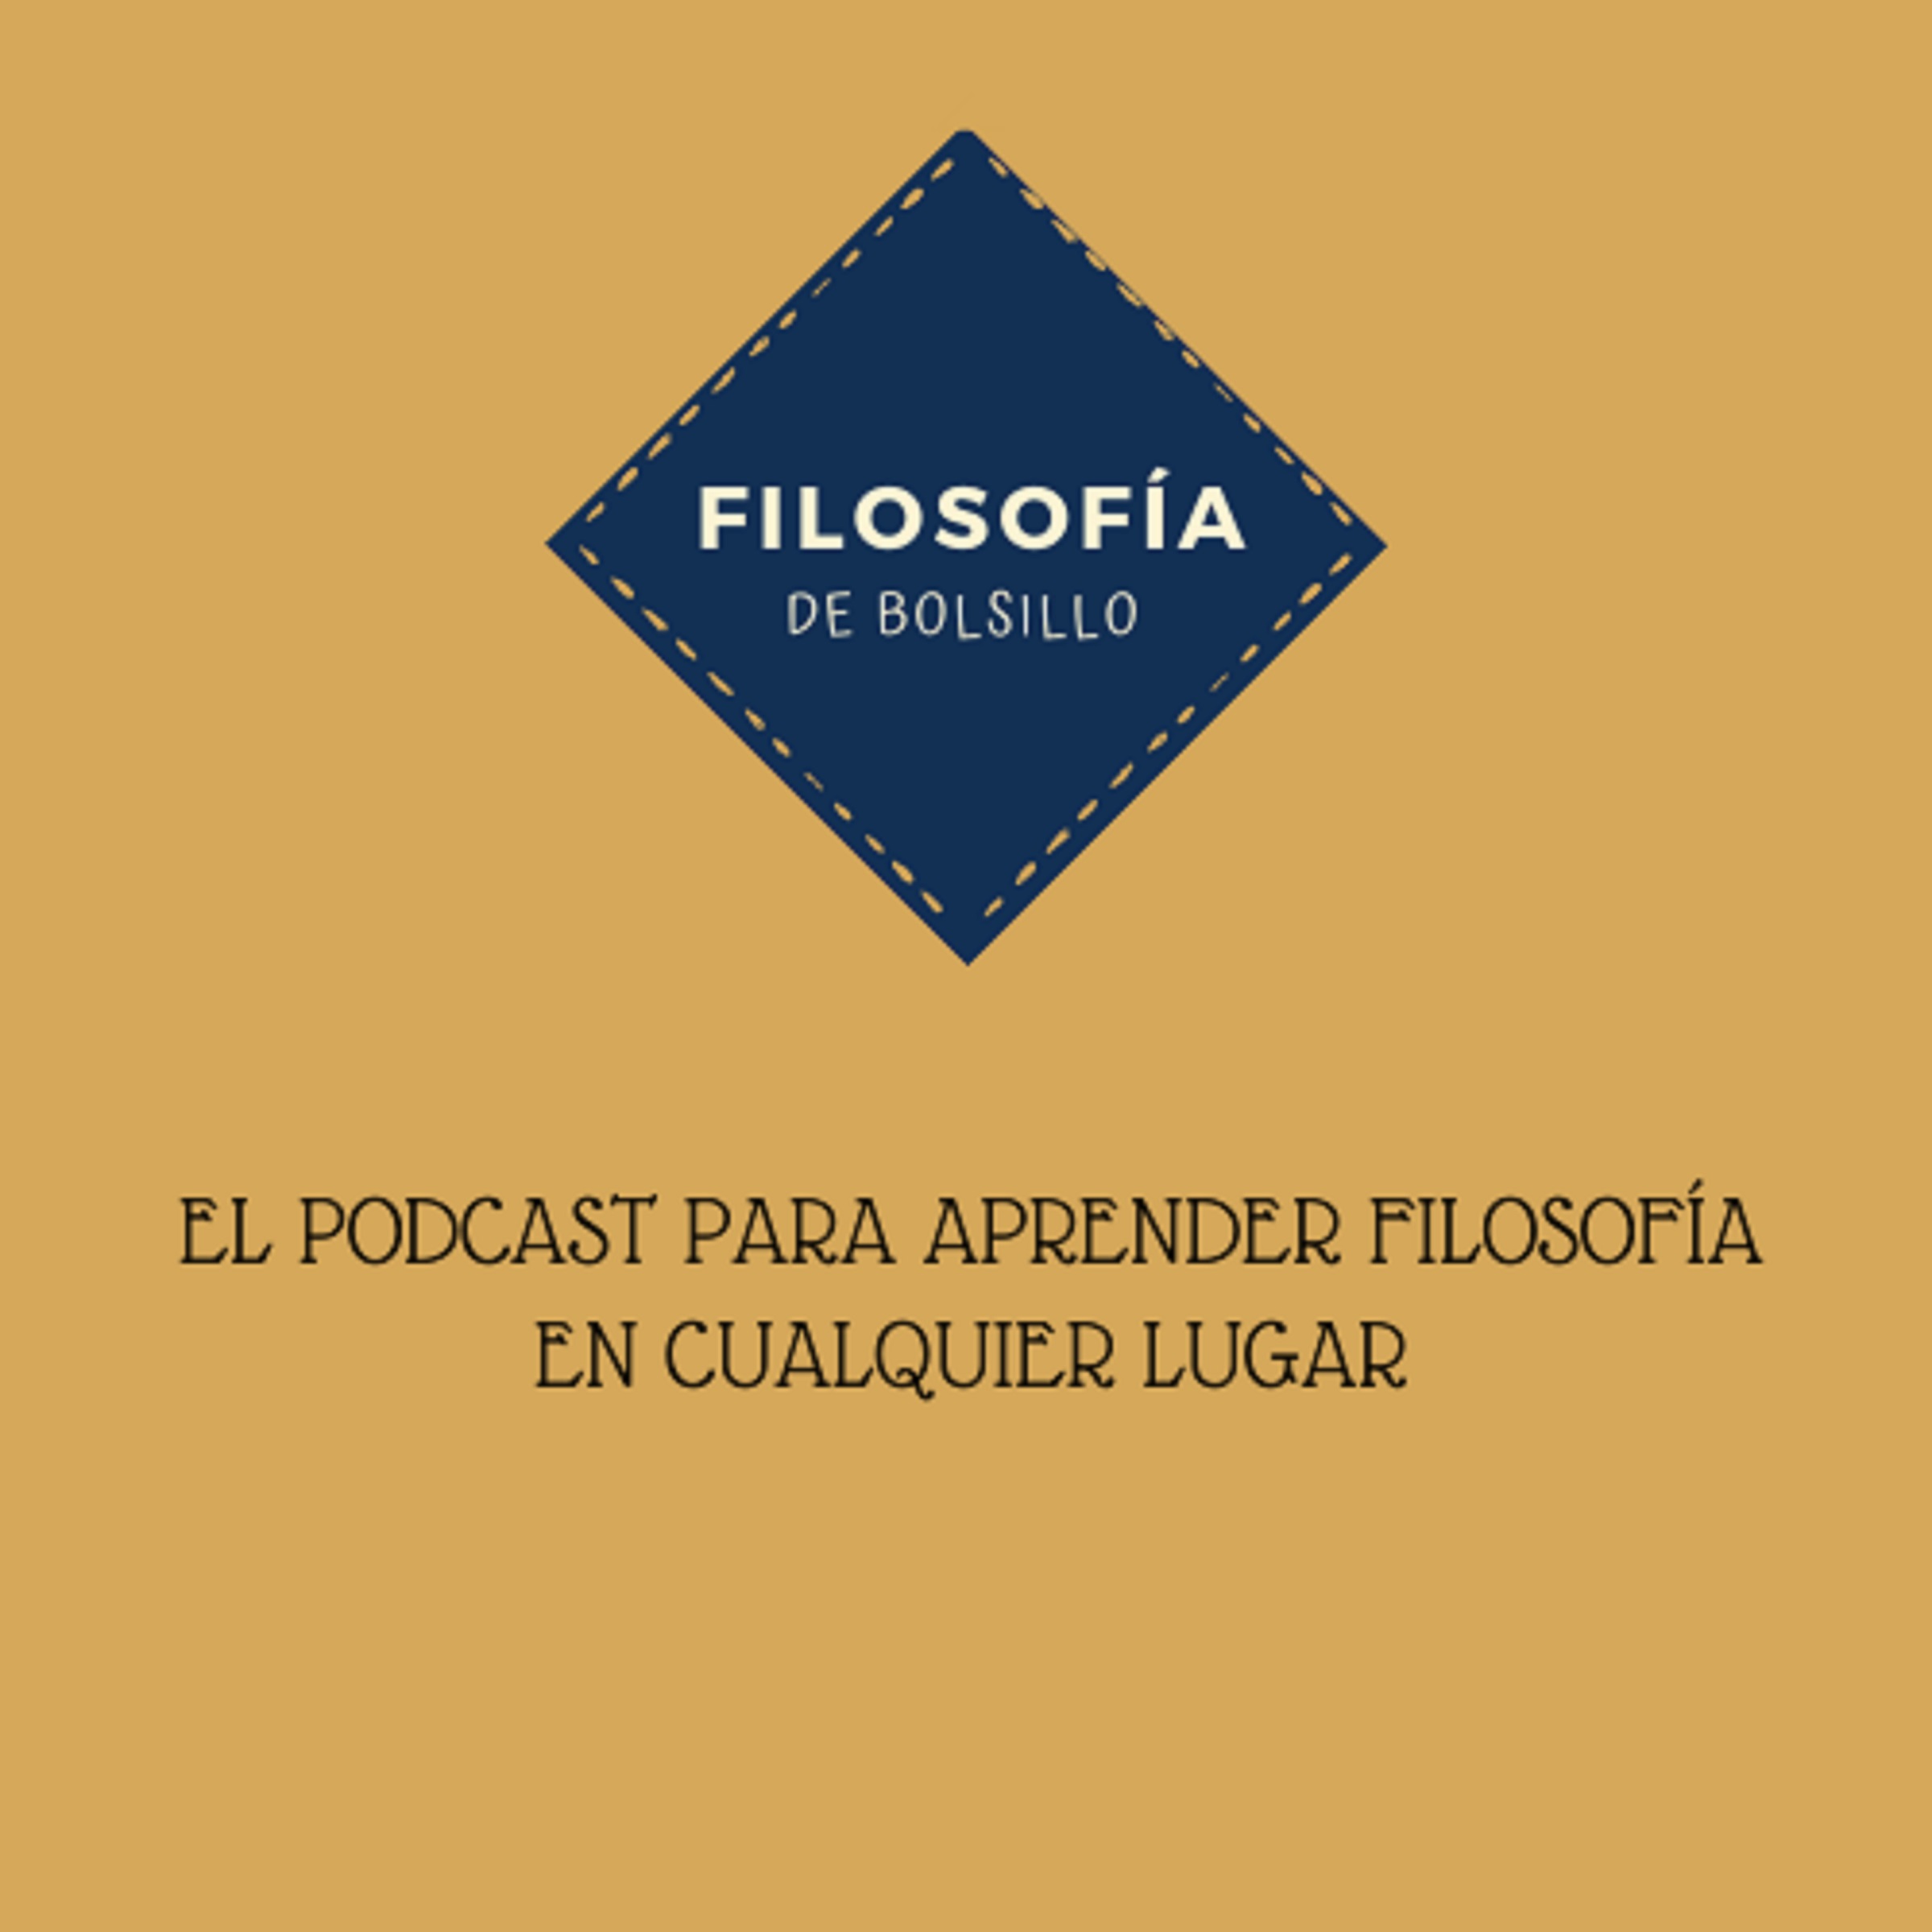 PODCAST "FILOSFÍA DE BOLSILLO"